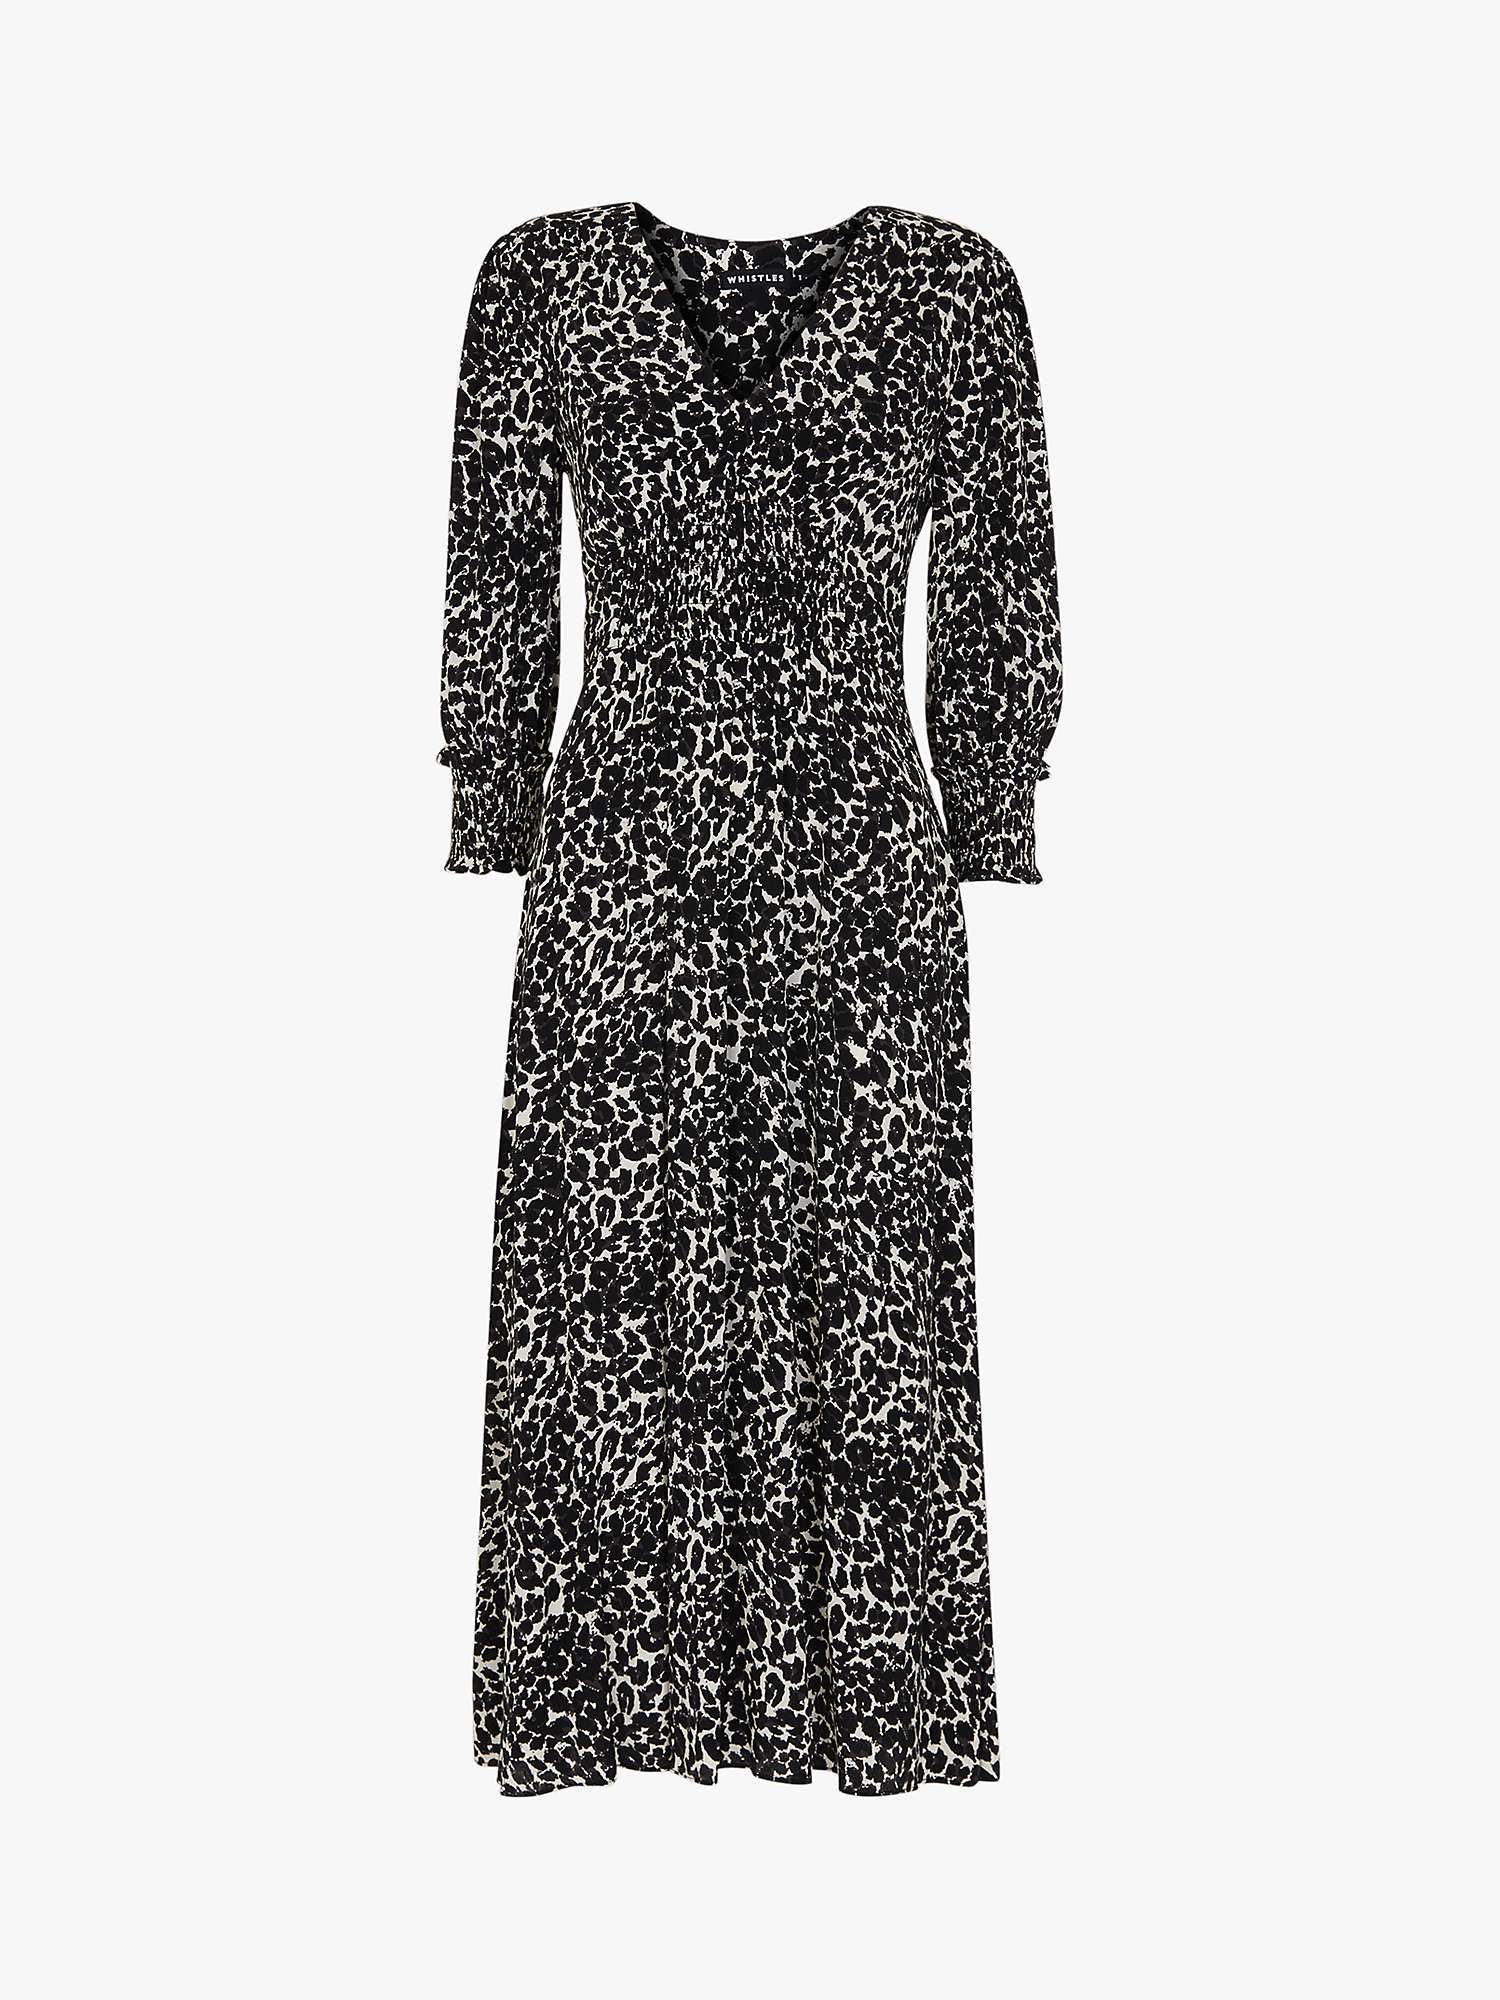 Whistles Leopard Print Shirred Dress, Black/Multi at John Lewis & Partners